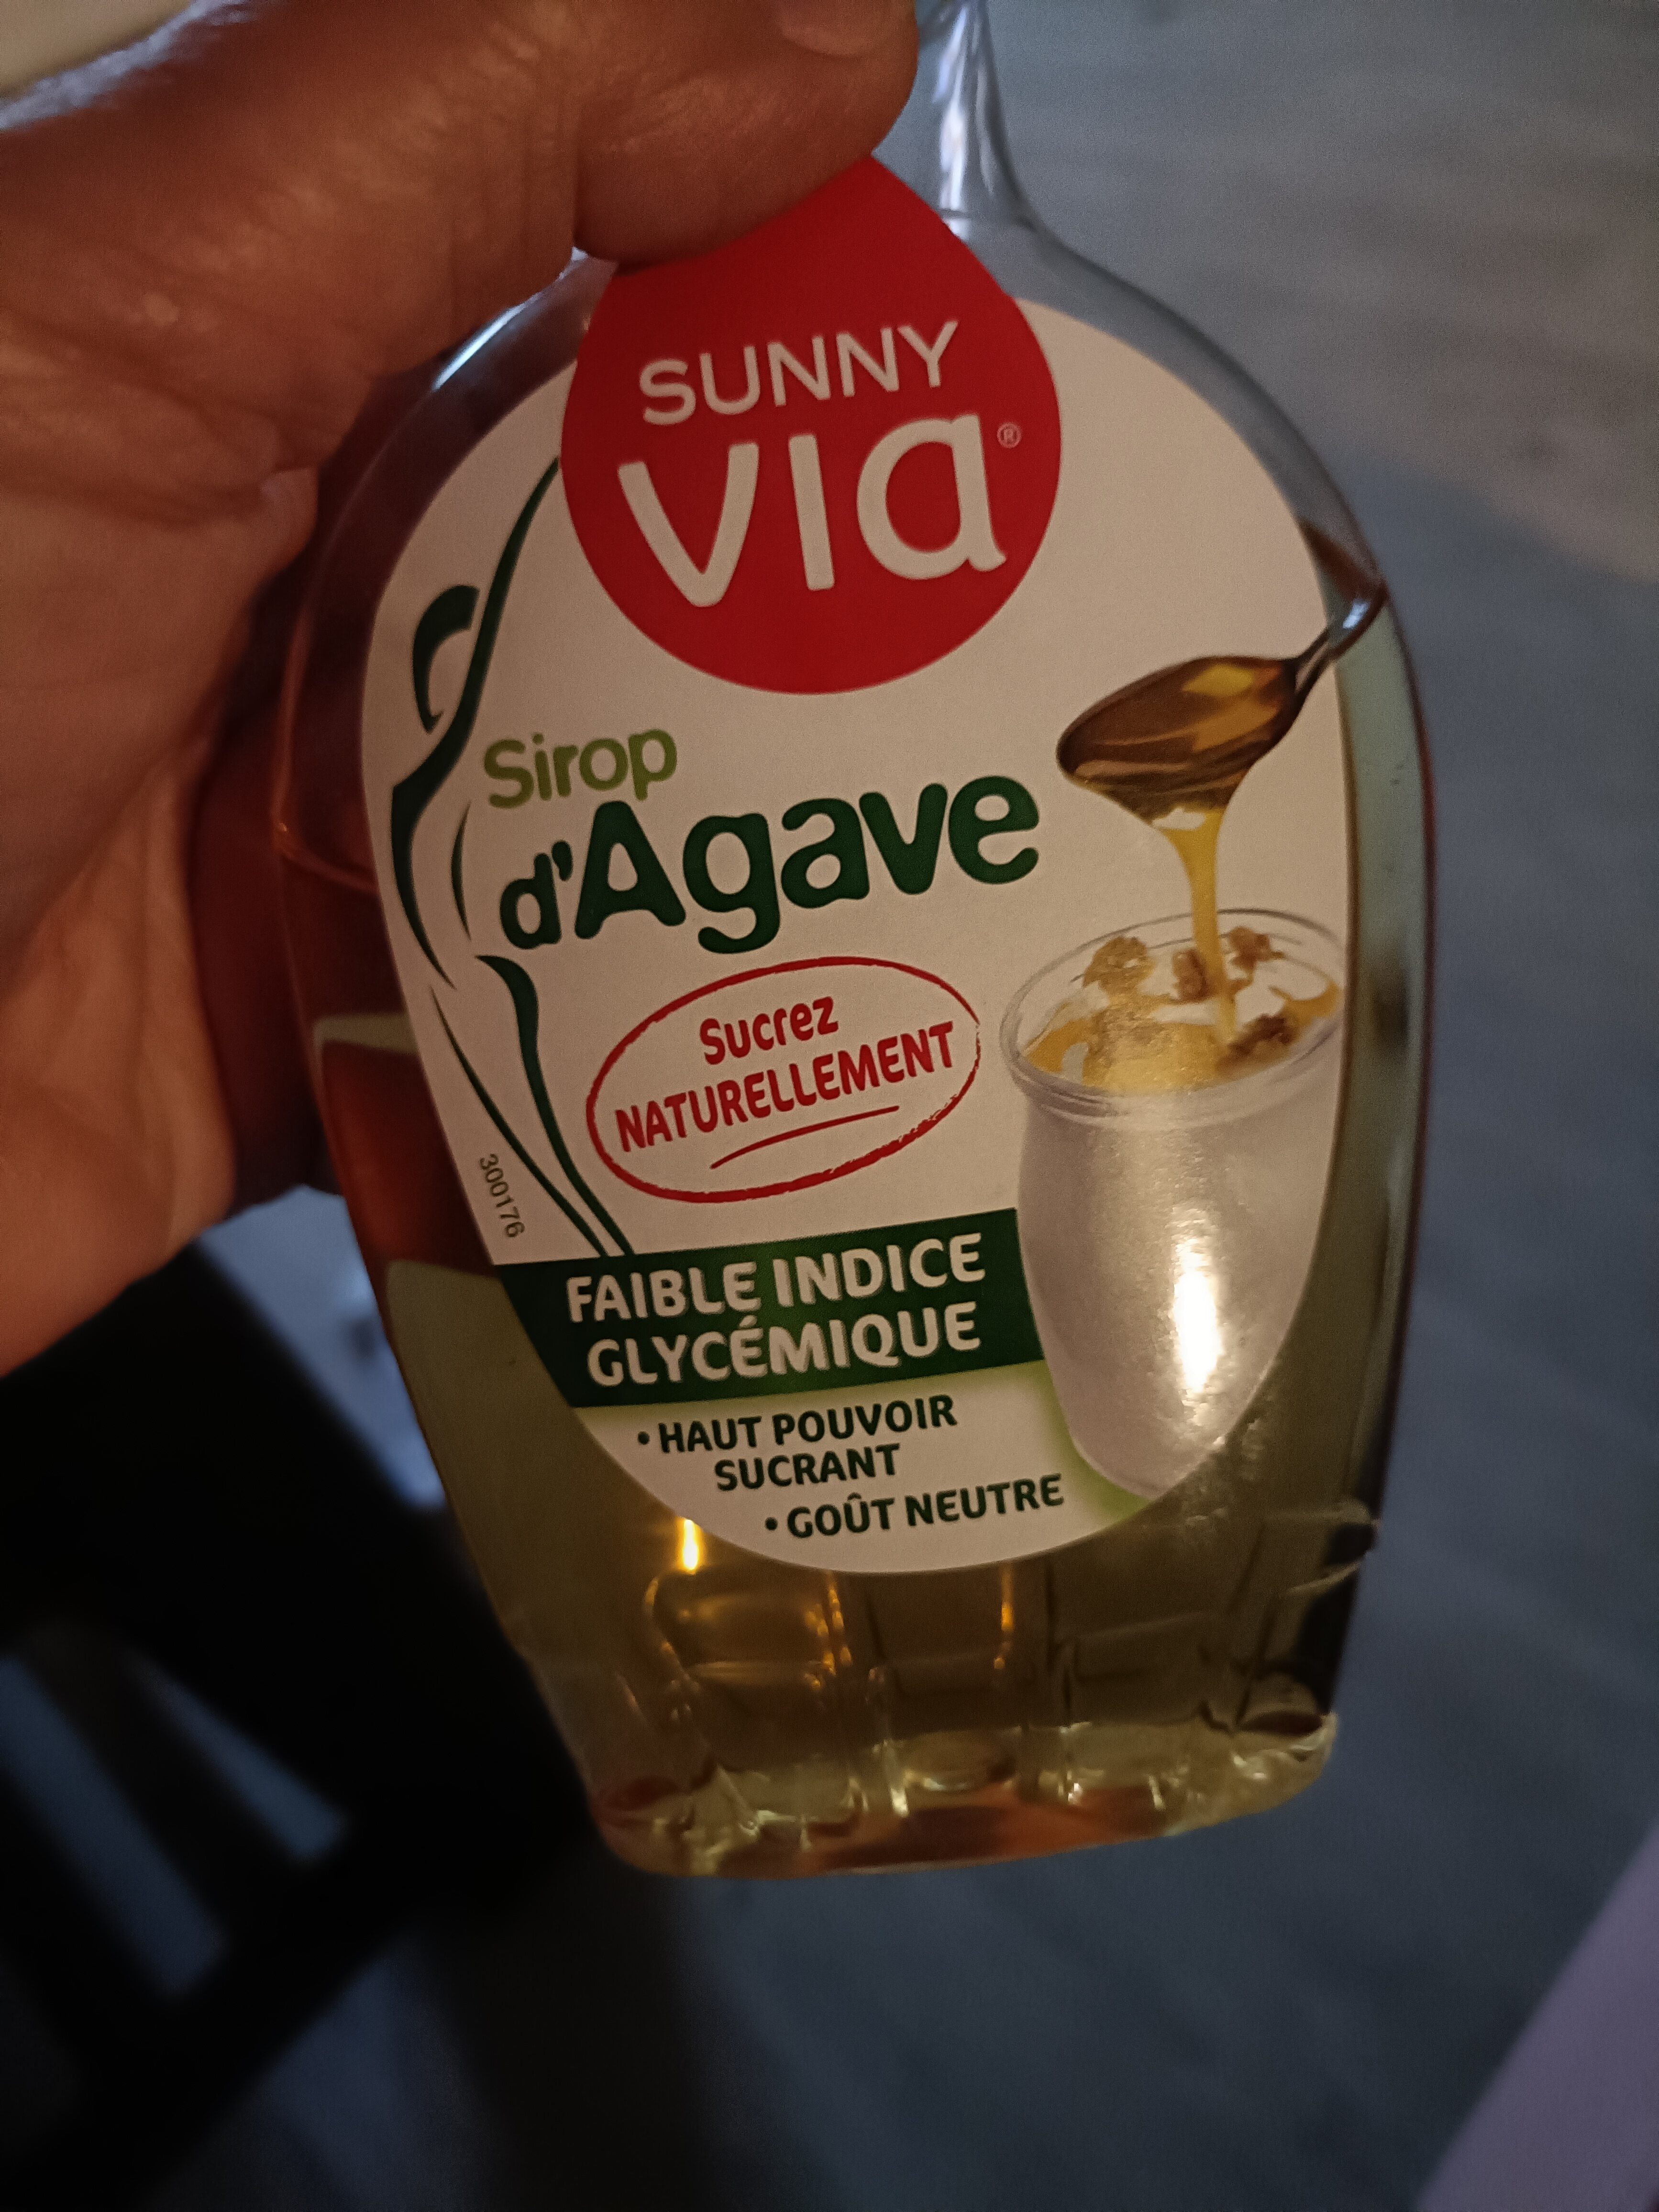 Sunny Via Agave syrup squeeze bottle 350g - Produit